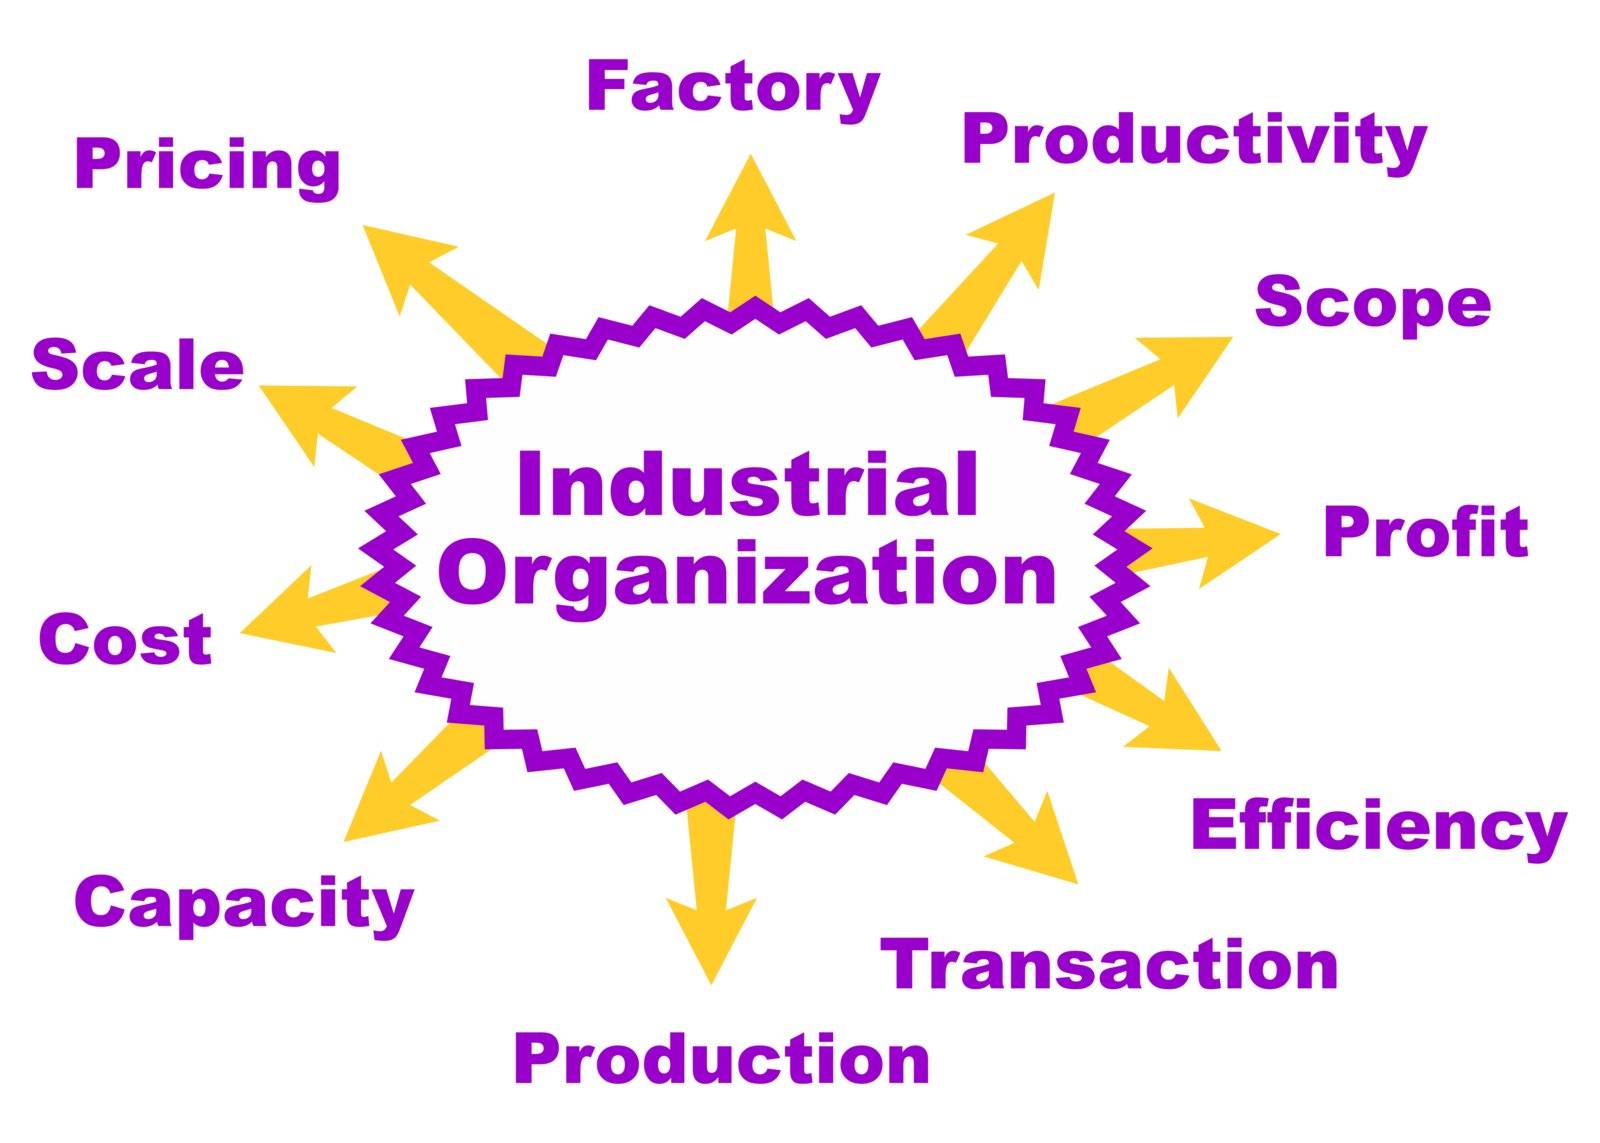 Industrial organization by PhotoEstelar